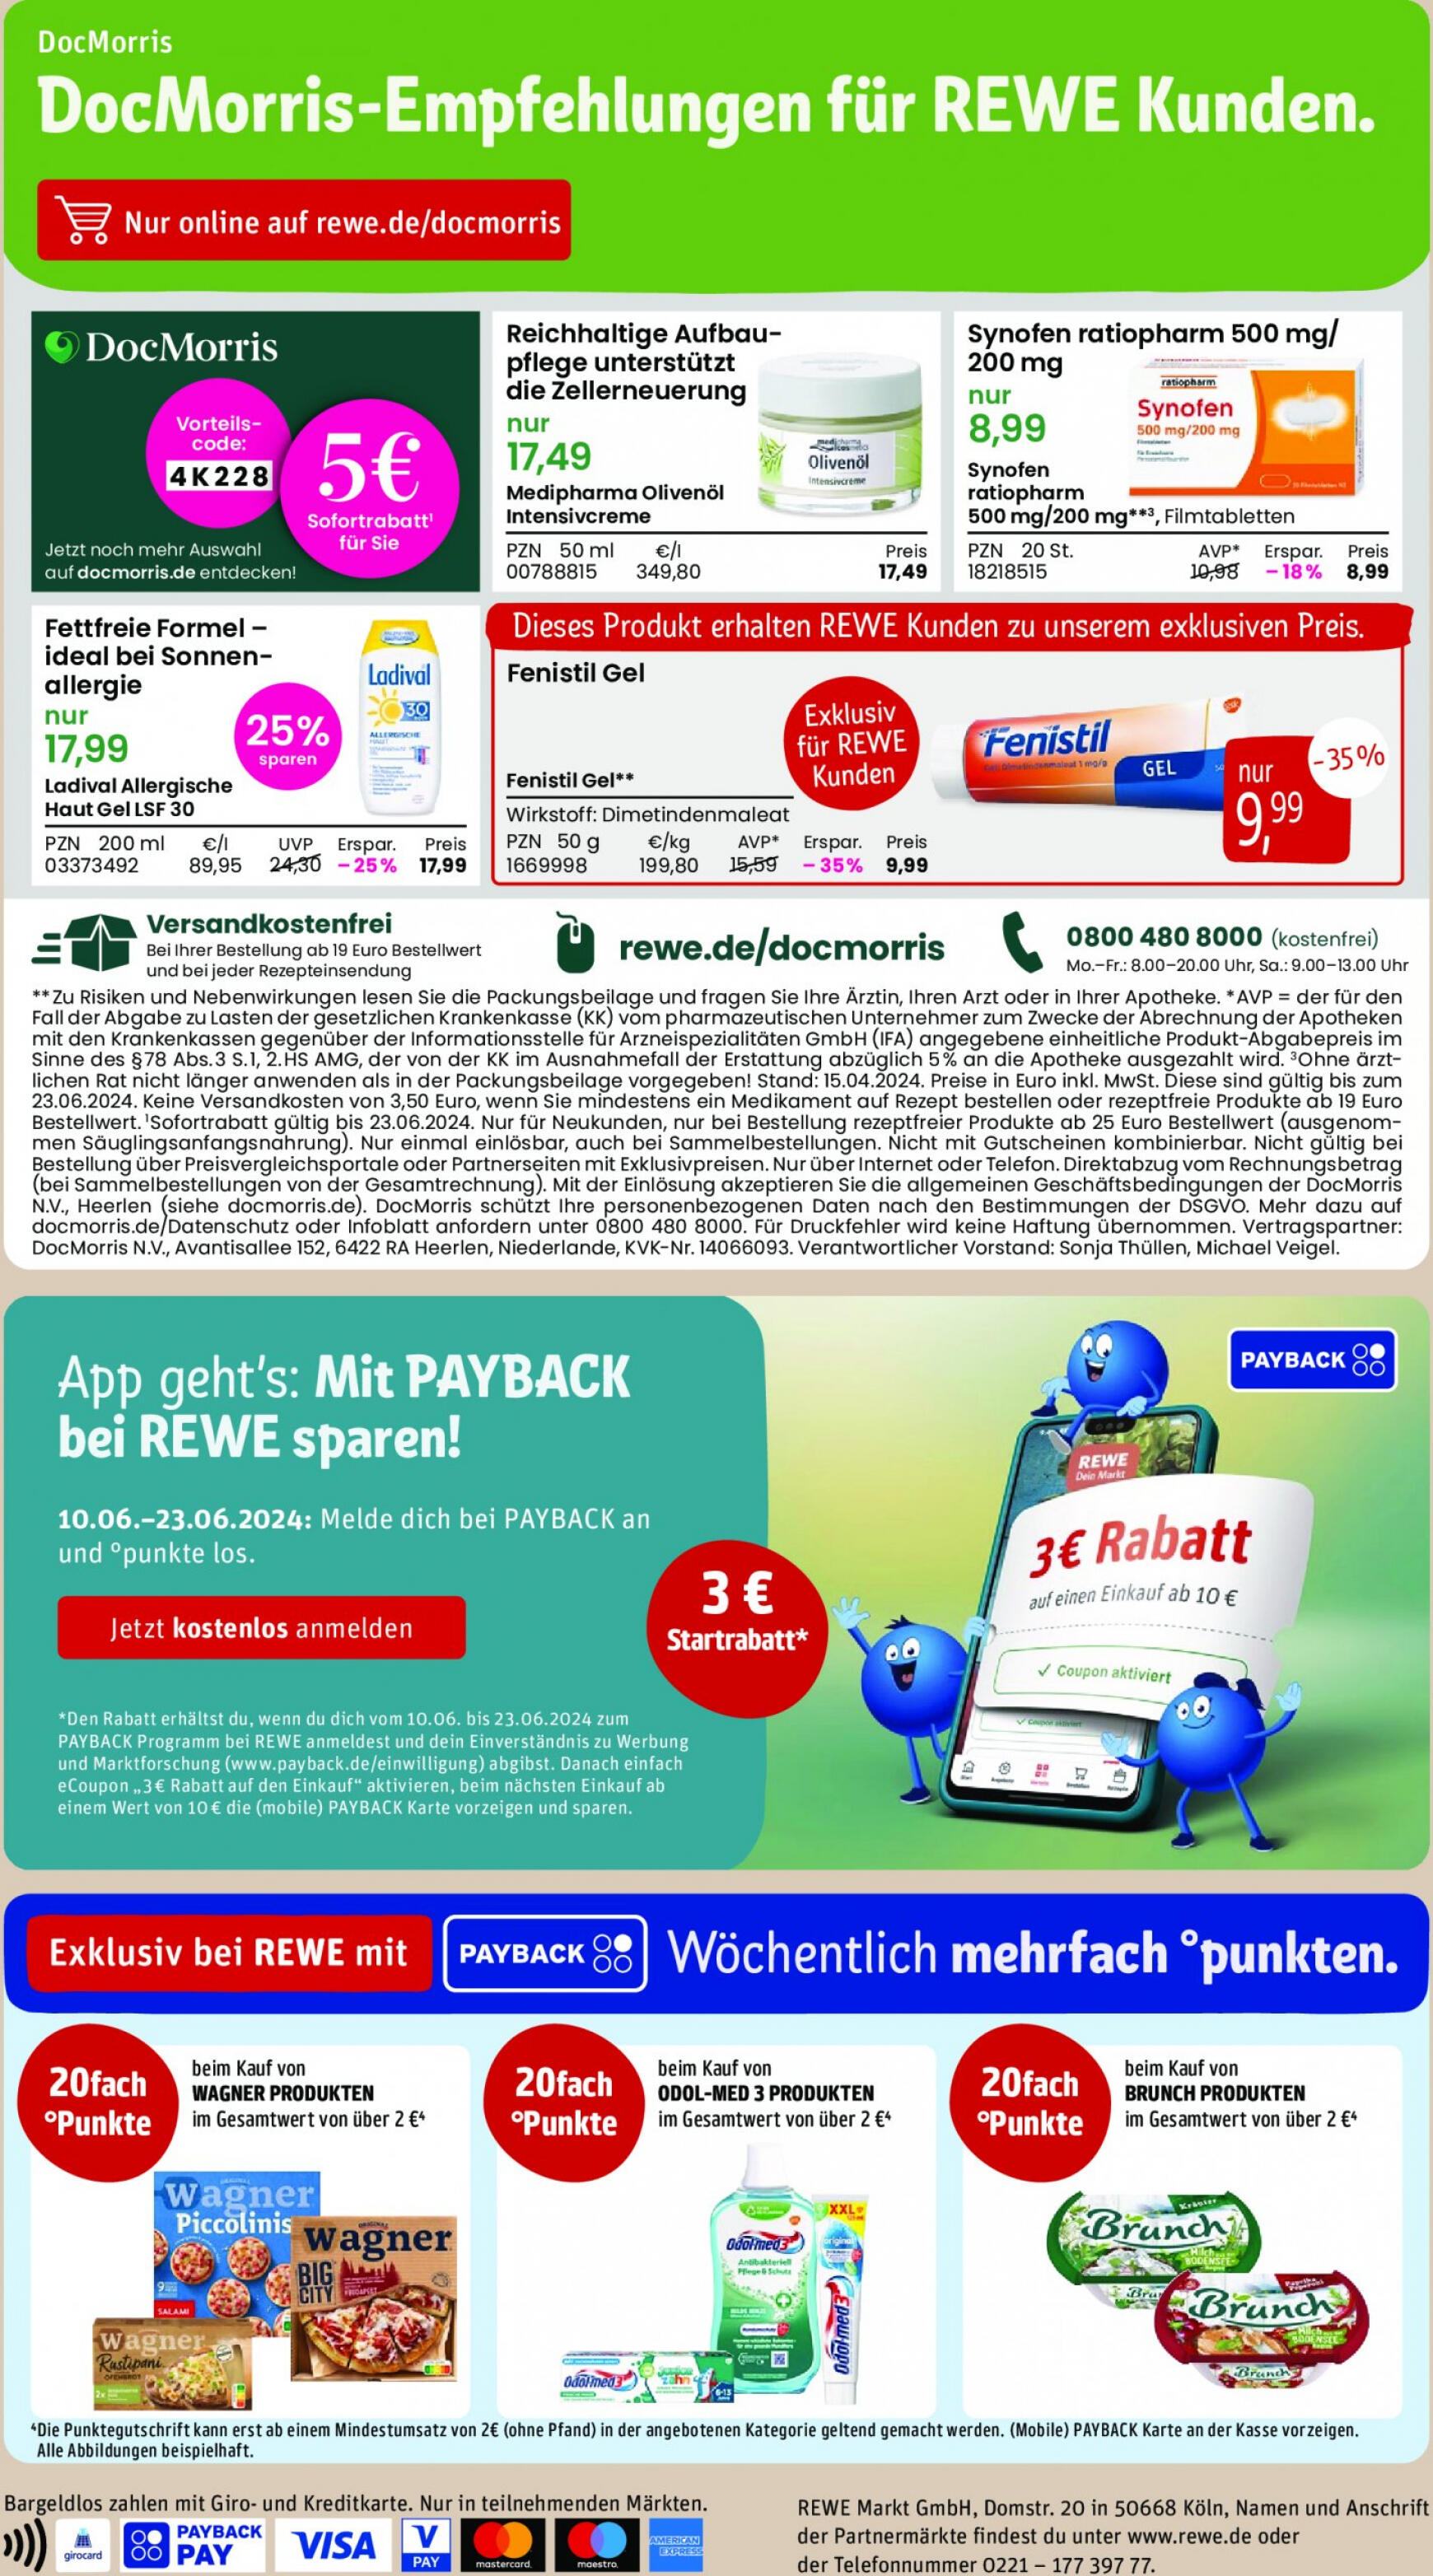 rewe - Flyer Rewe aktuell 10.06. - 15.06. - page: 34